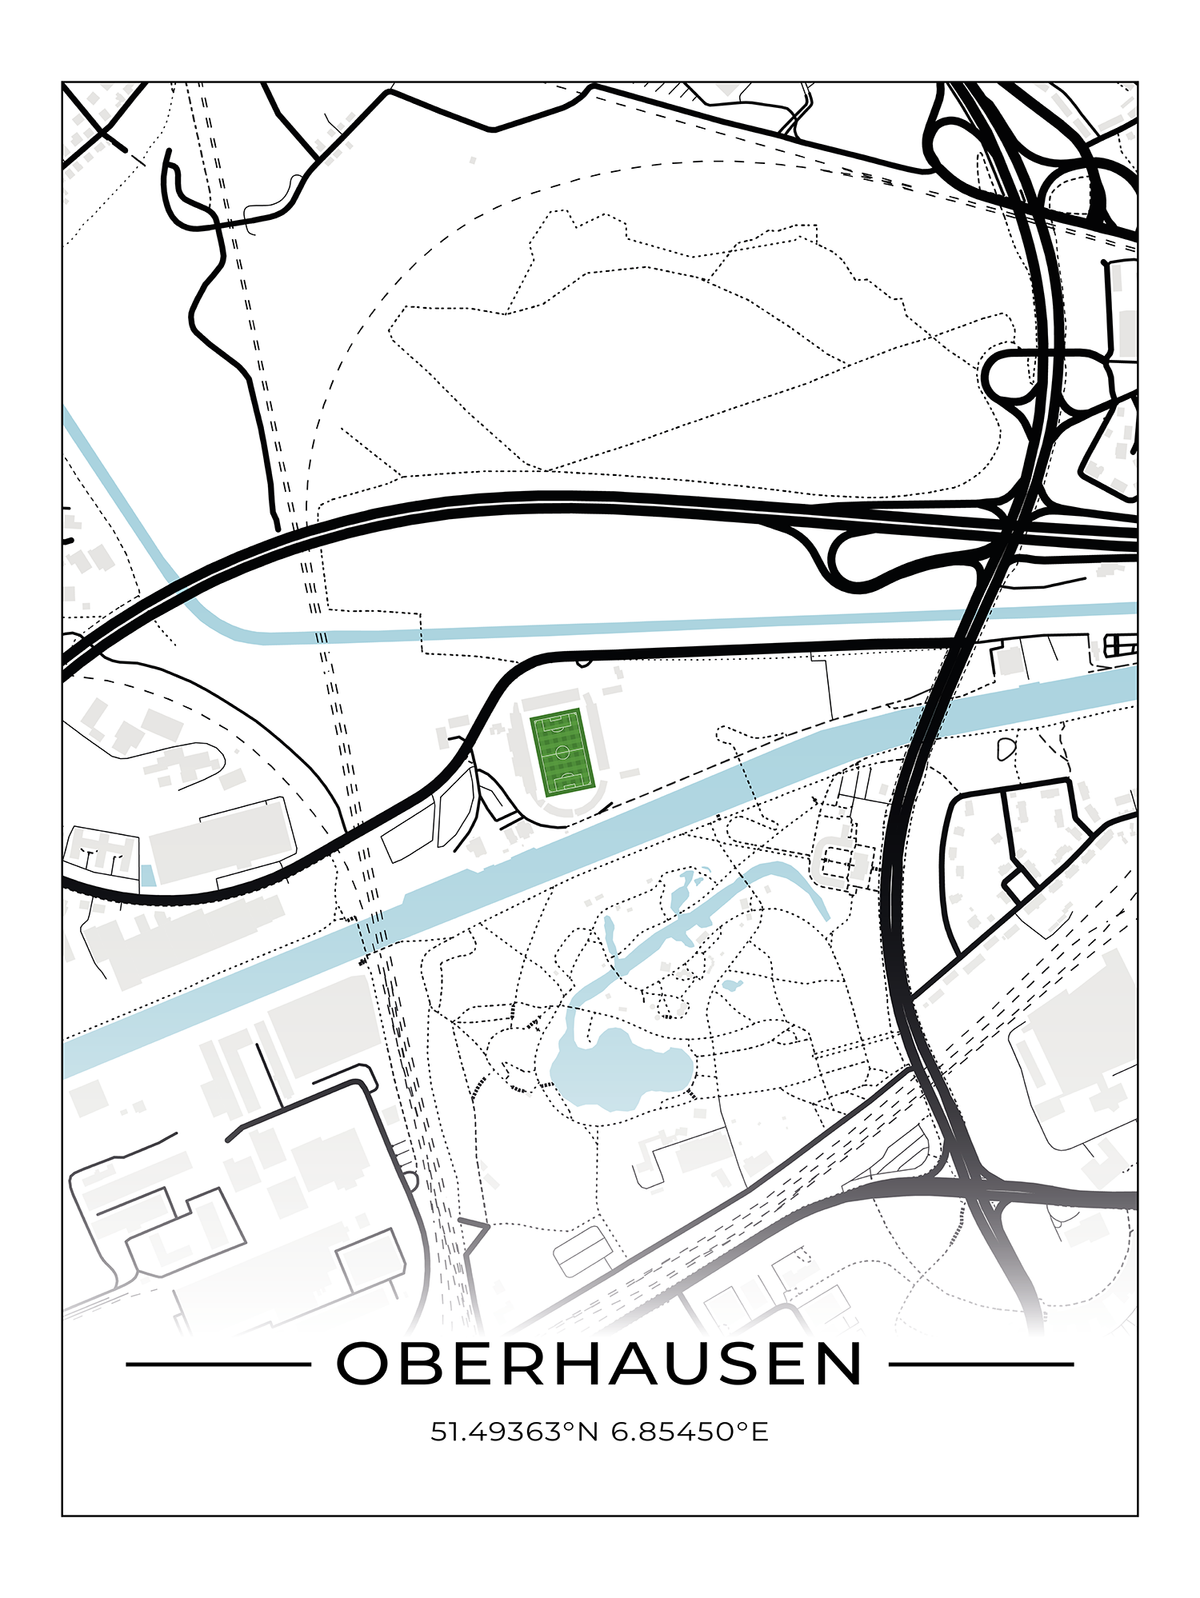 Stadion Poster Oberhausen